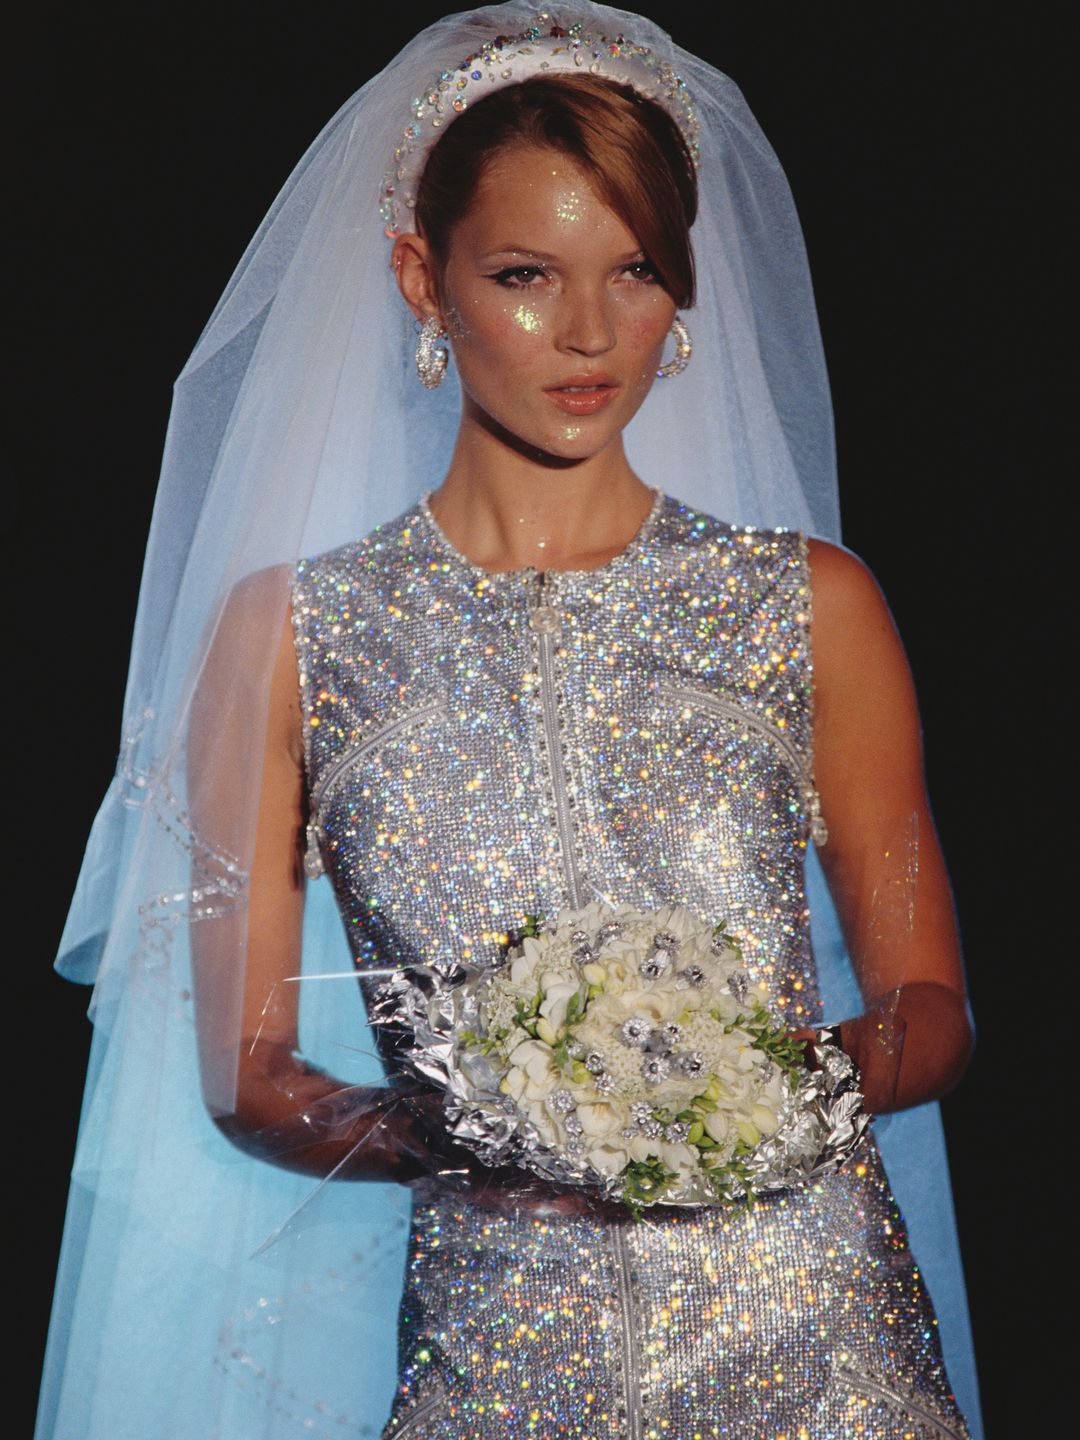 Kate Moss wearing a silver glittery wedding dress 